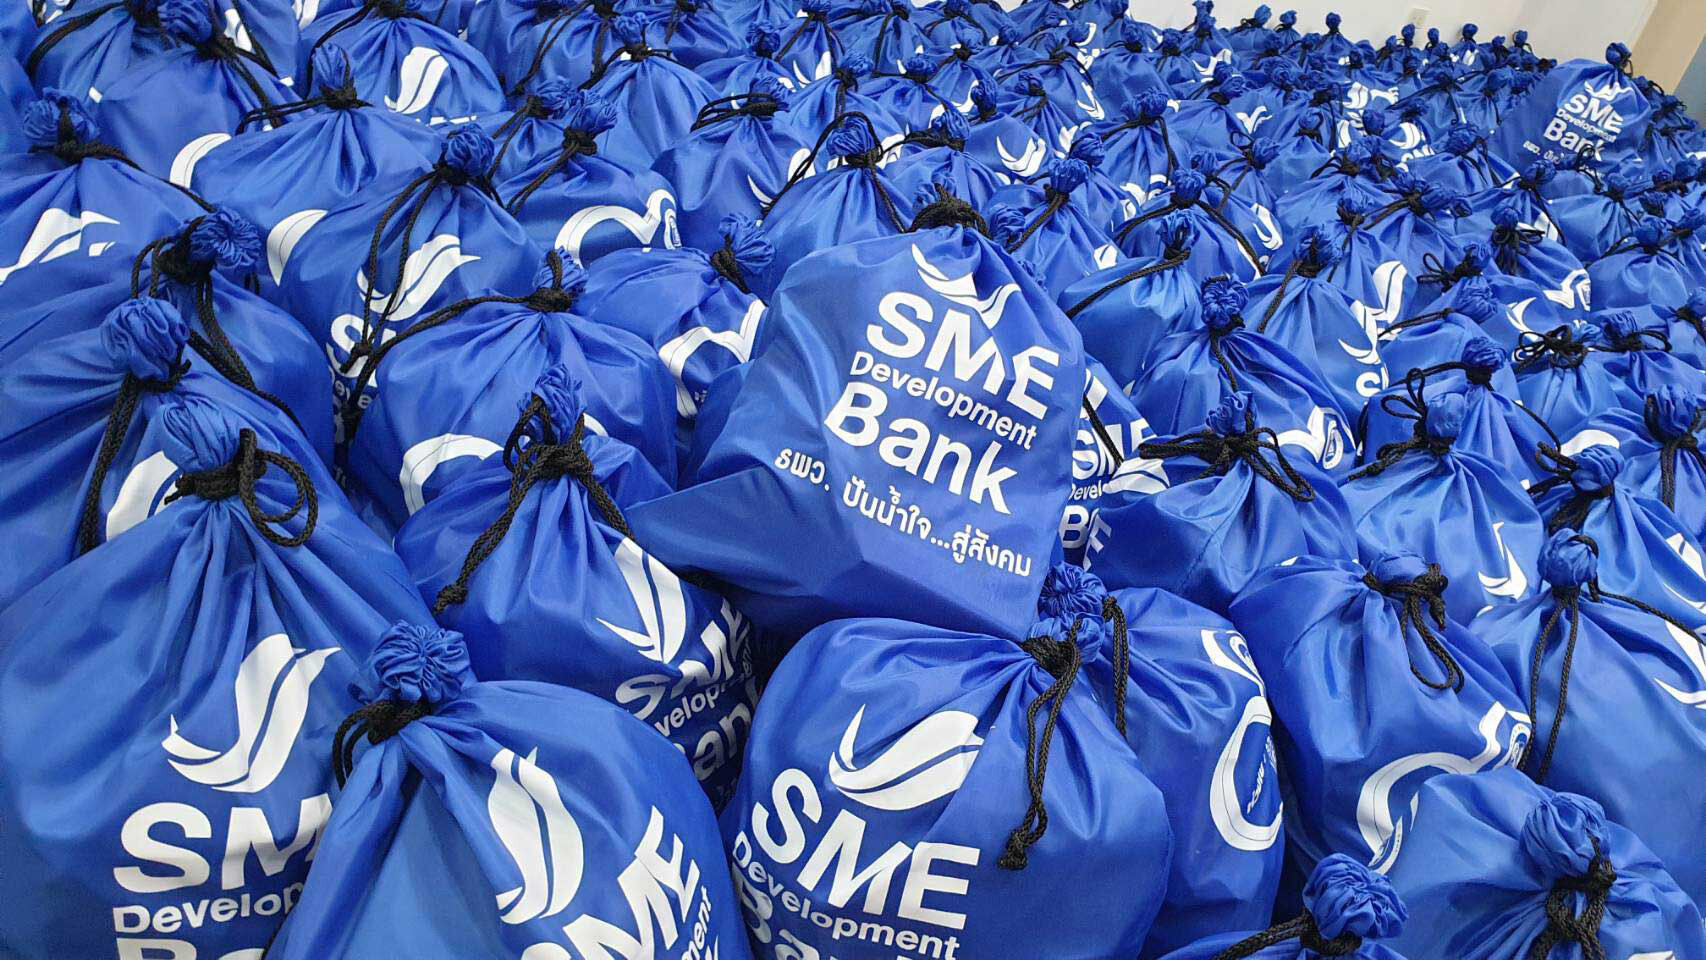 SME D Bank ส่งต่อกำลังใจร่วมบริจาคถุงยังชีพสู้ภัยวิกฤติ